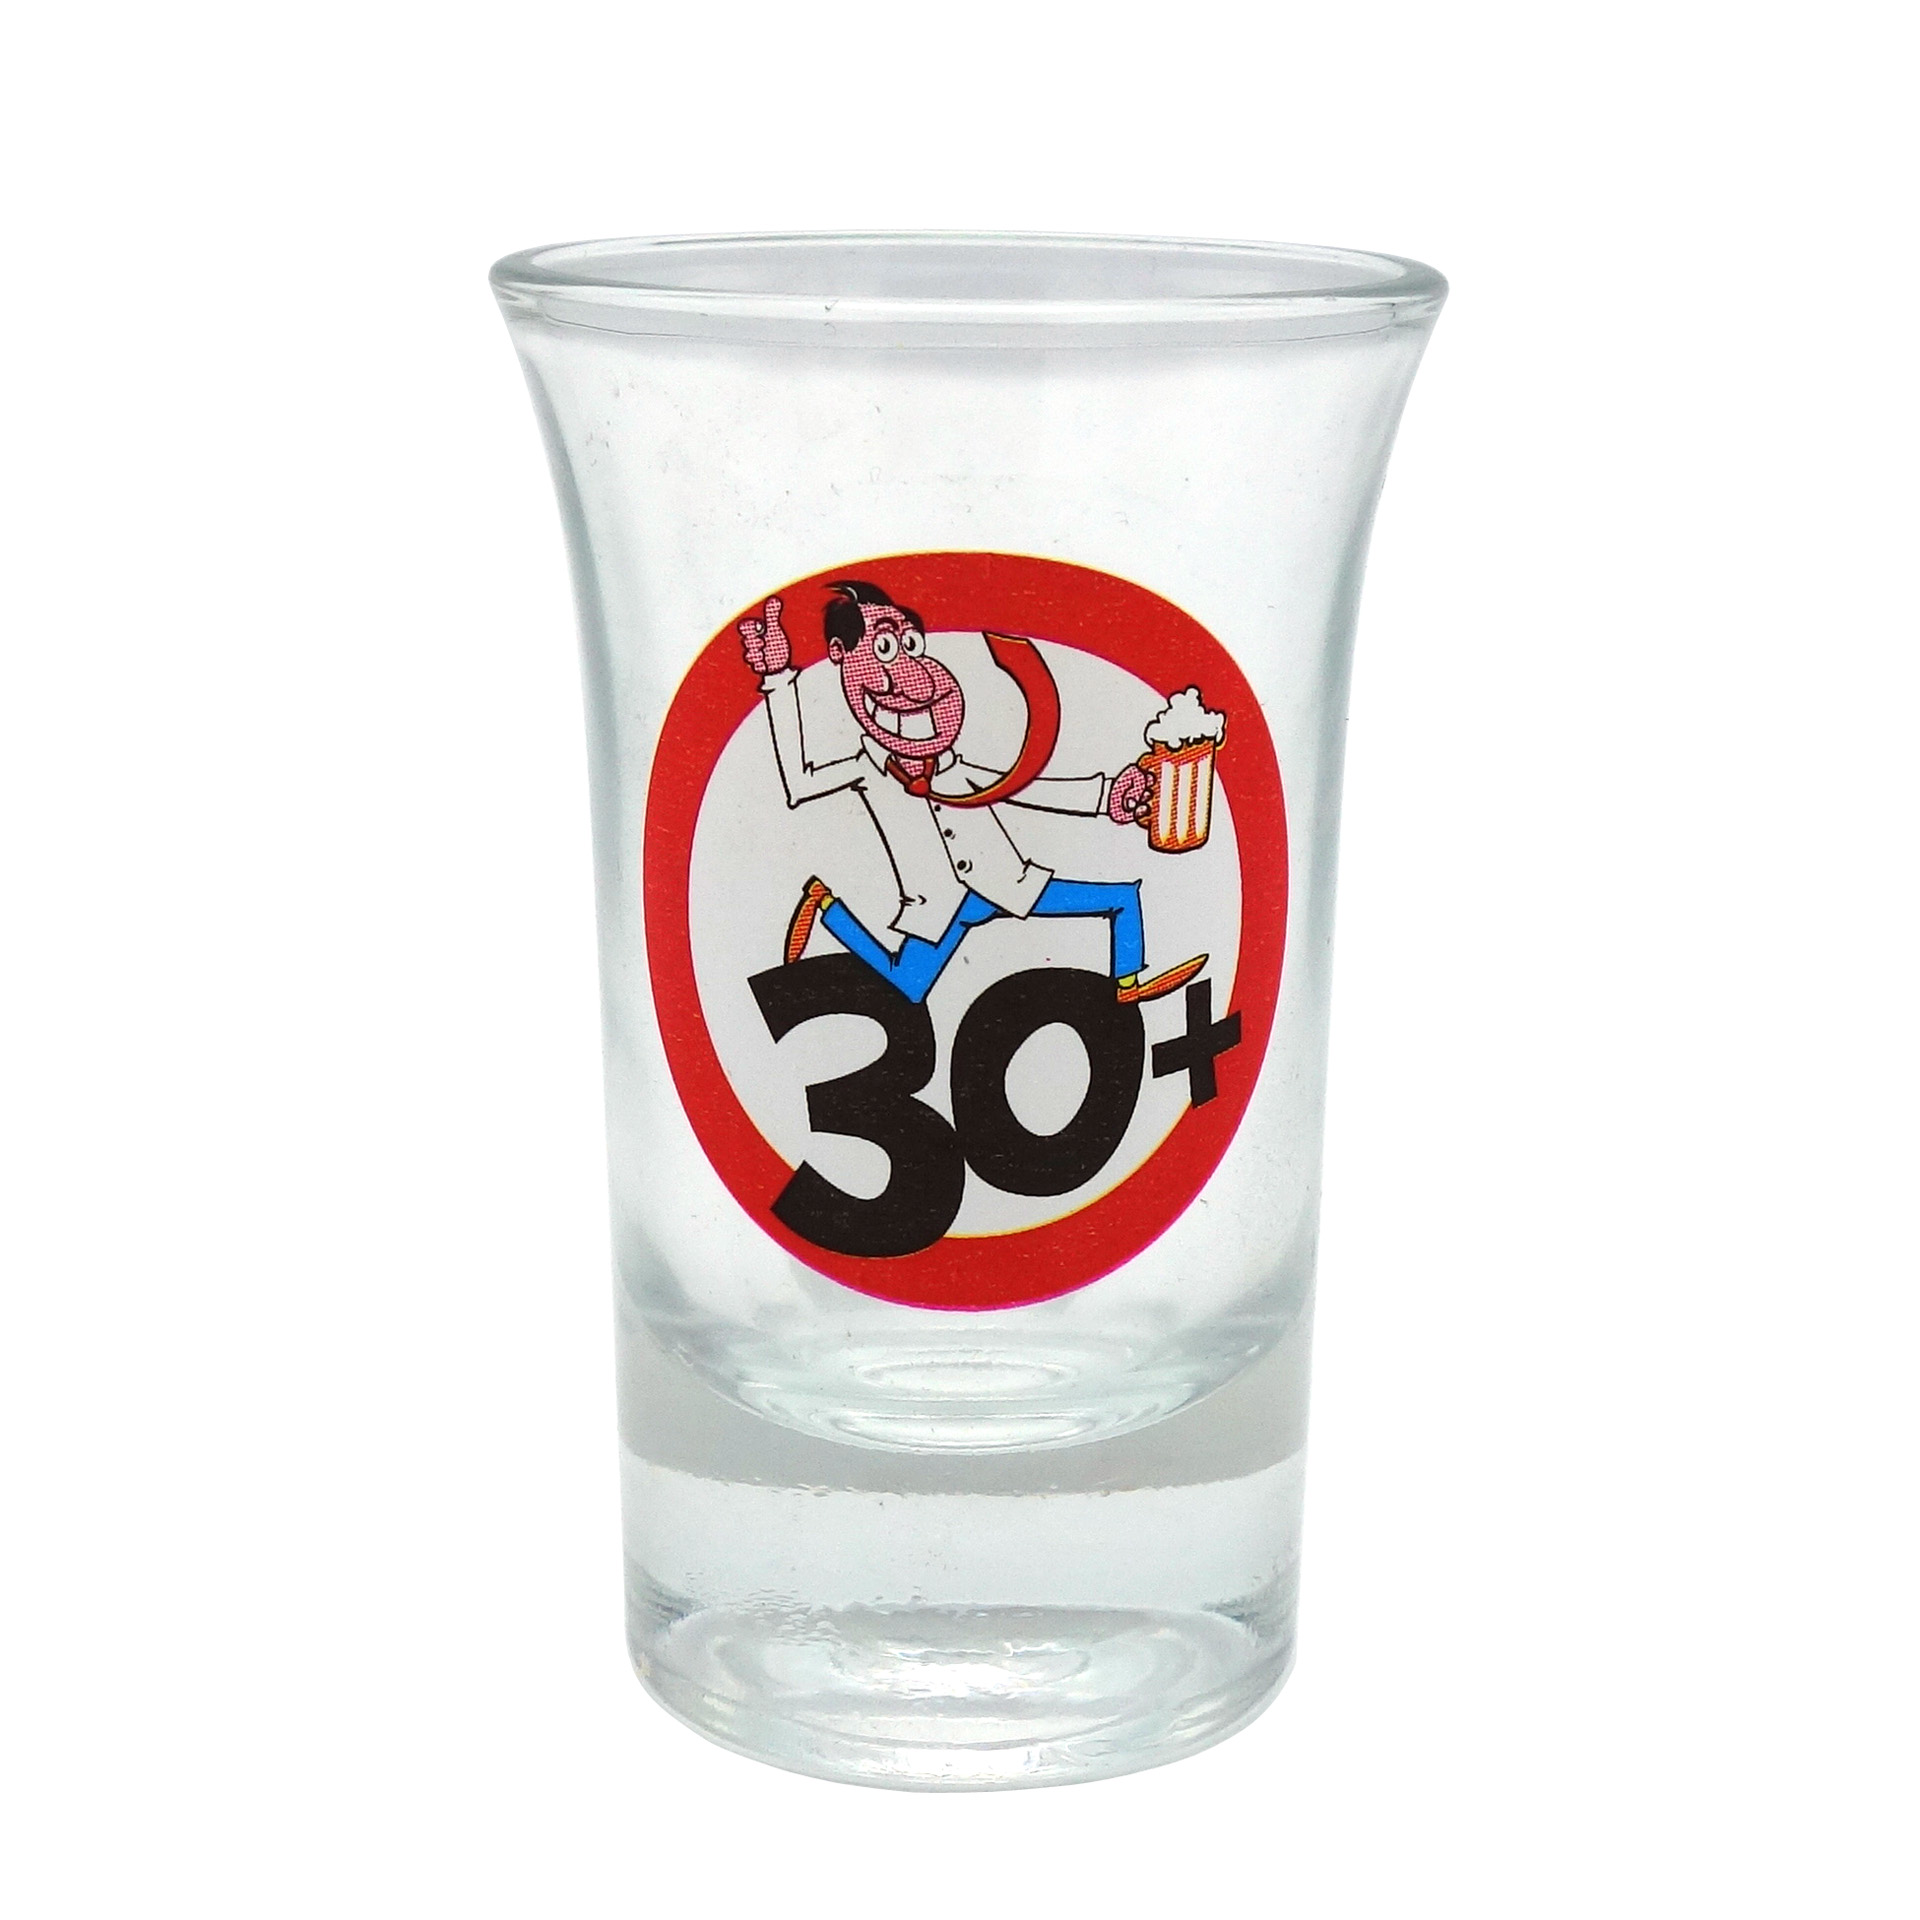 Geburtstagsgeschenk Schnapsglas "30" Shotglas Geschenkidee